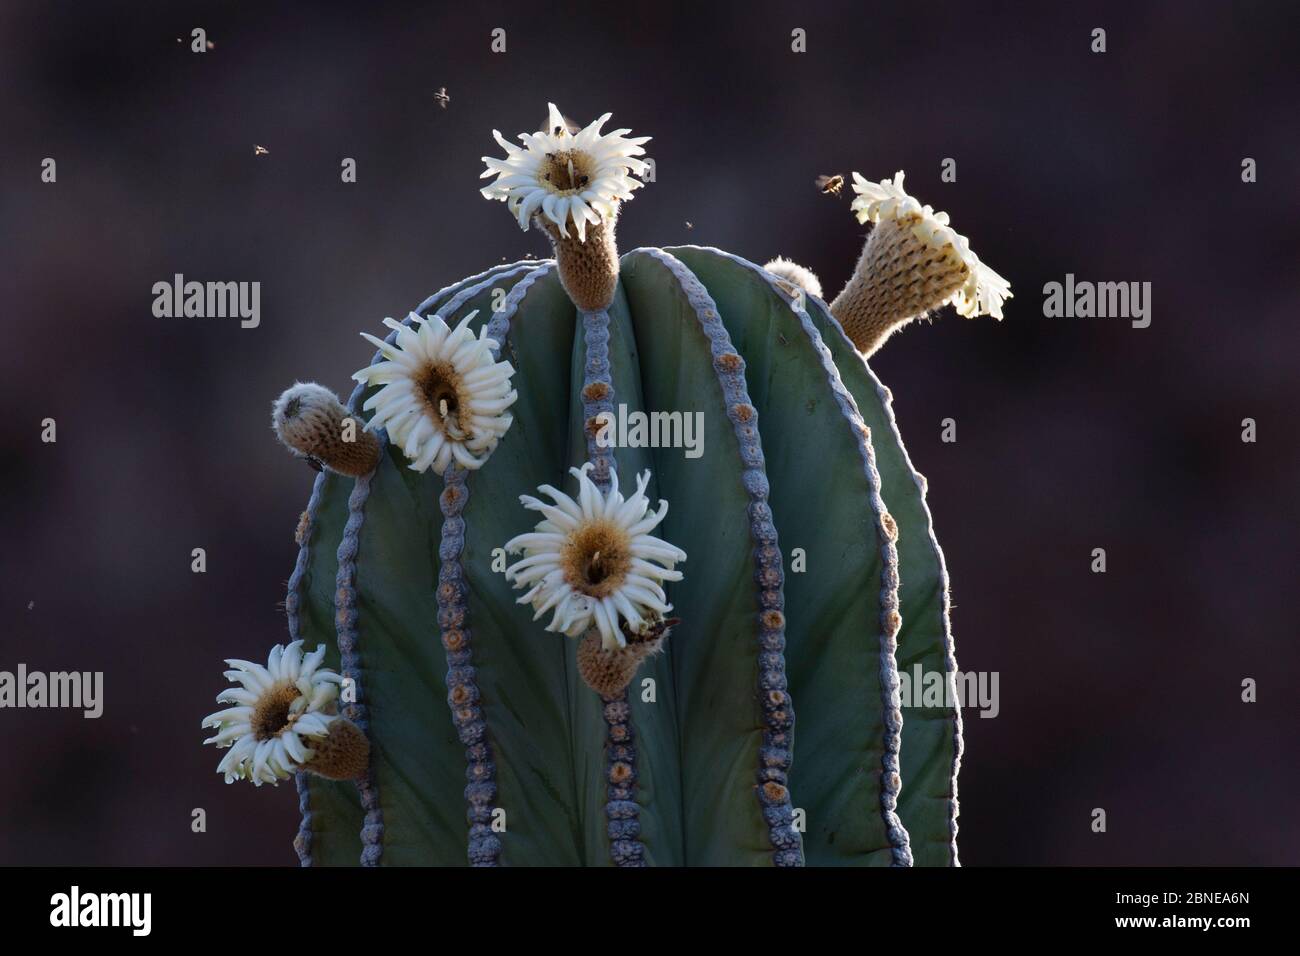 Elephant cactus (Pachycereus pringlei) in flower with bees looking for pollen, Vizcaino Desert, Baja California, Mexico, April. Stock Photo